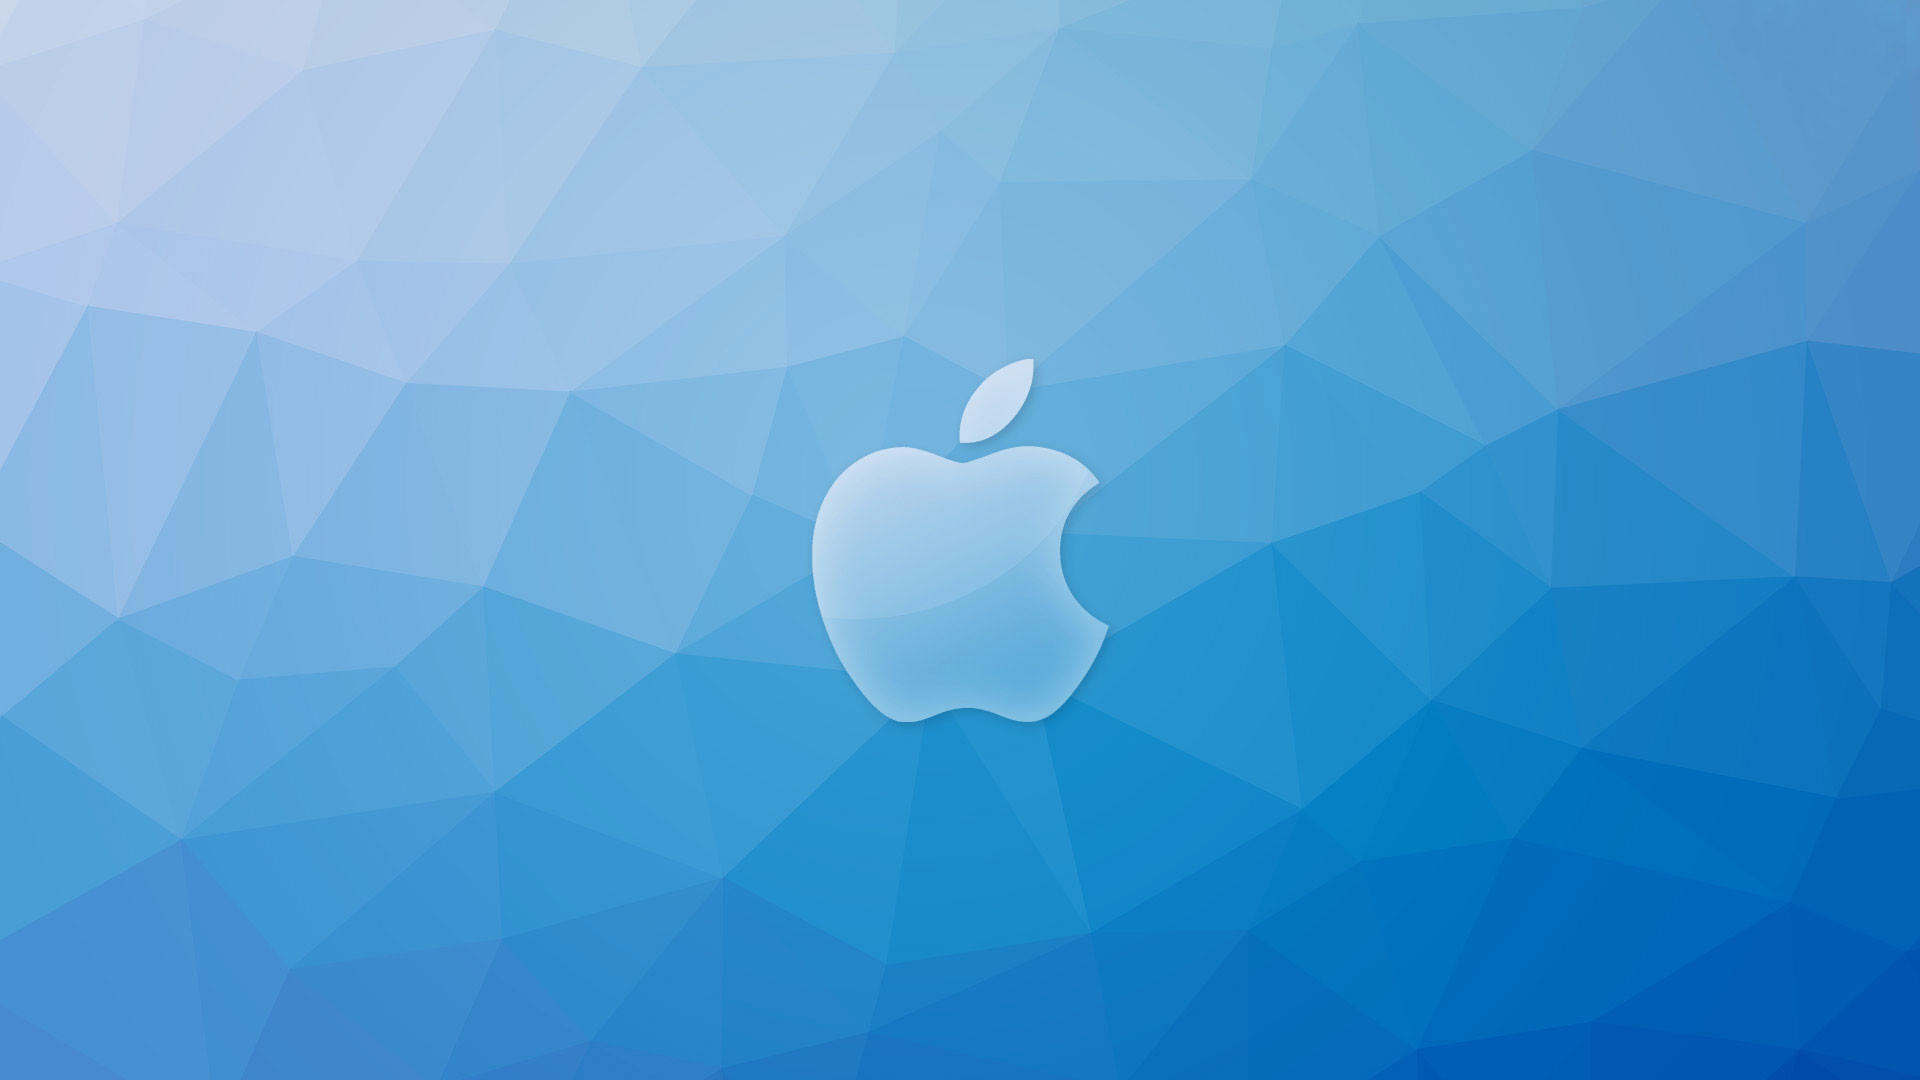 1920x1080 hd pics photos stunning blue apple logo cool professional look nice hd  quality desktop background wallpaper